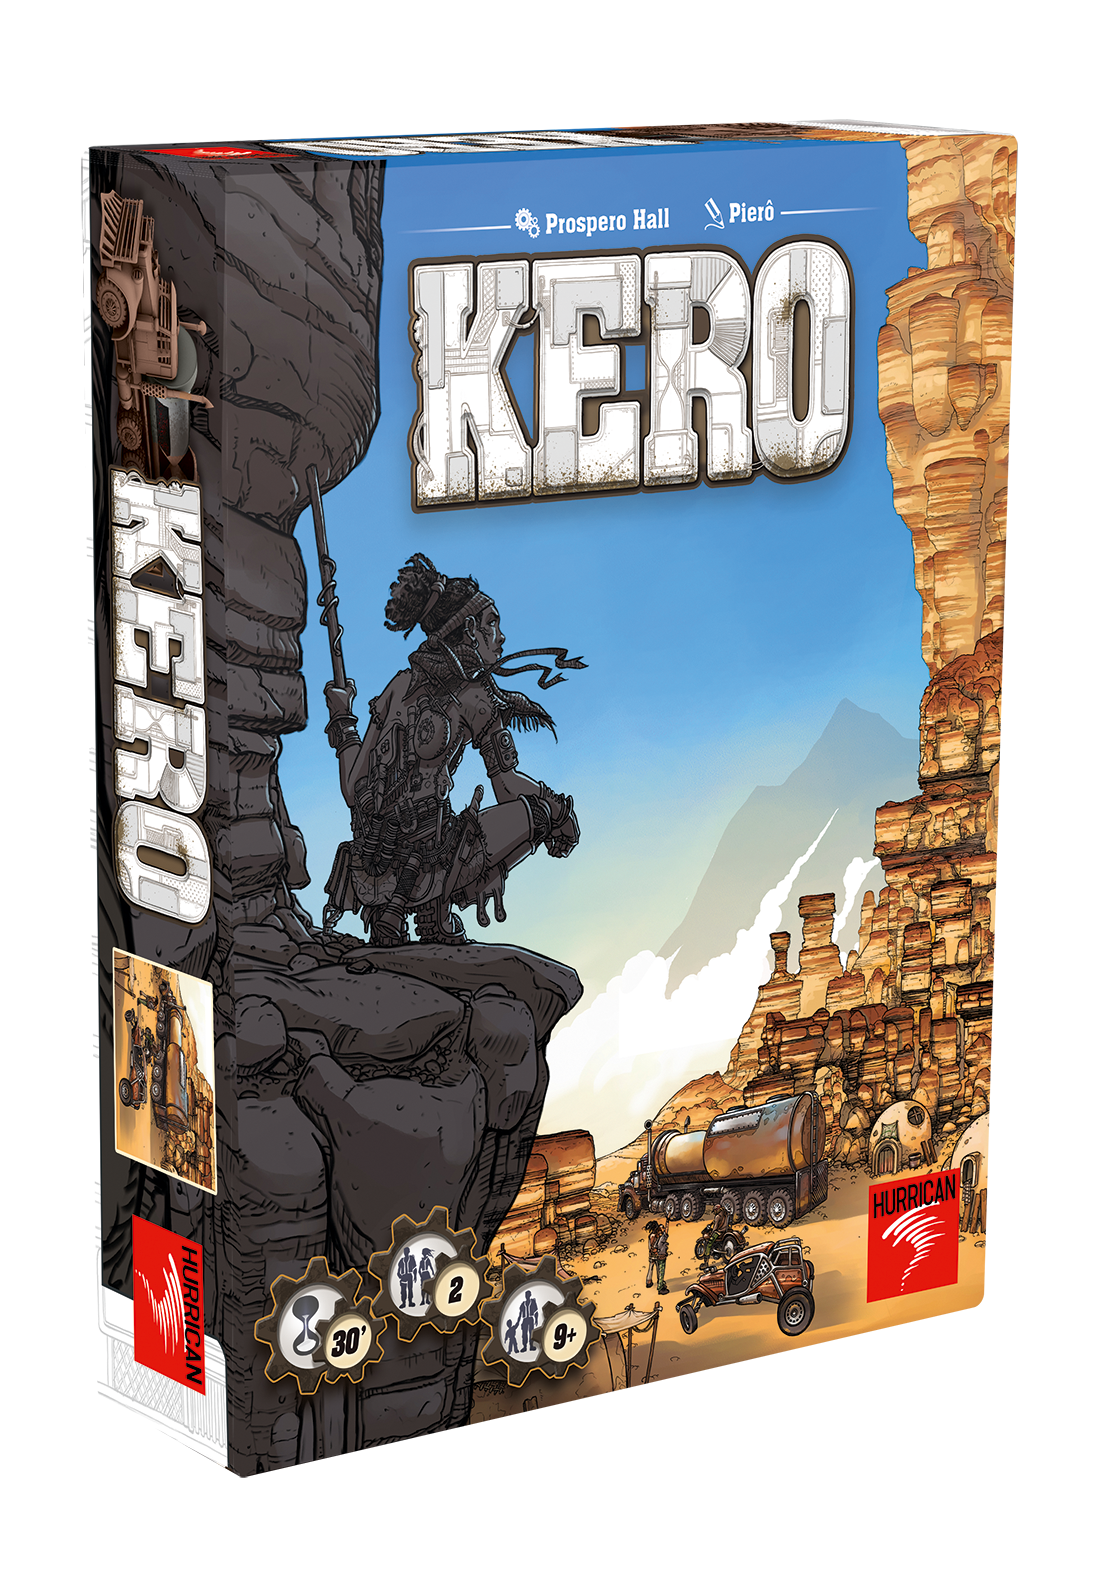 Kero Strategy Board Game